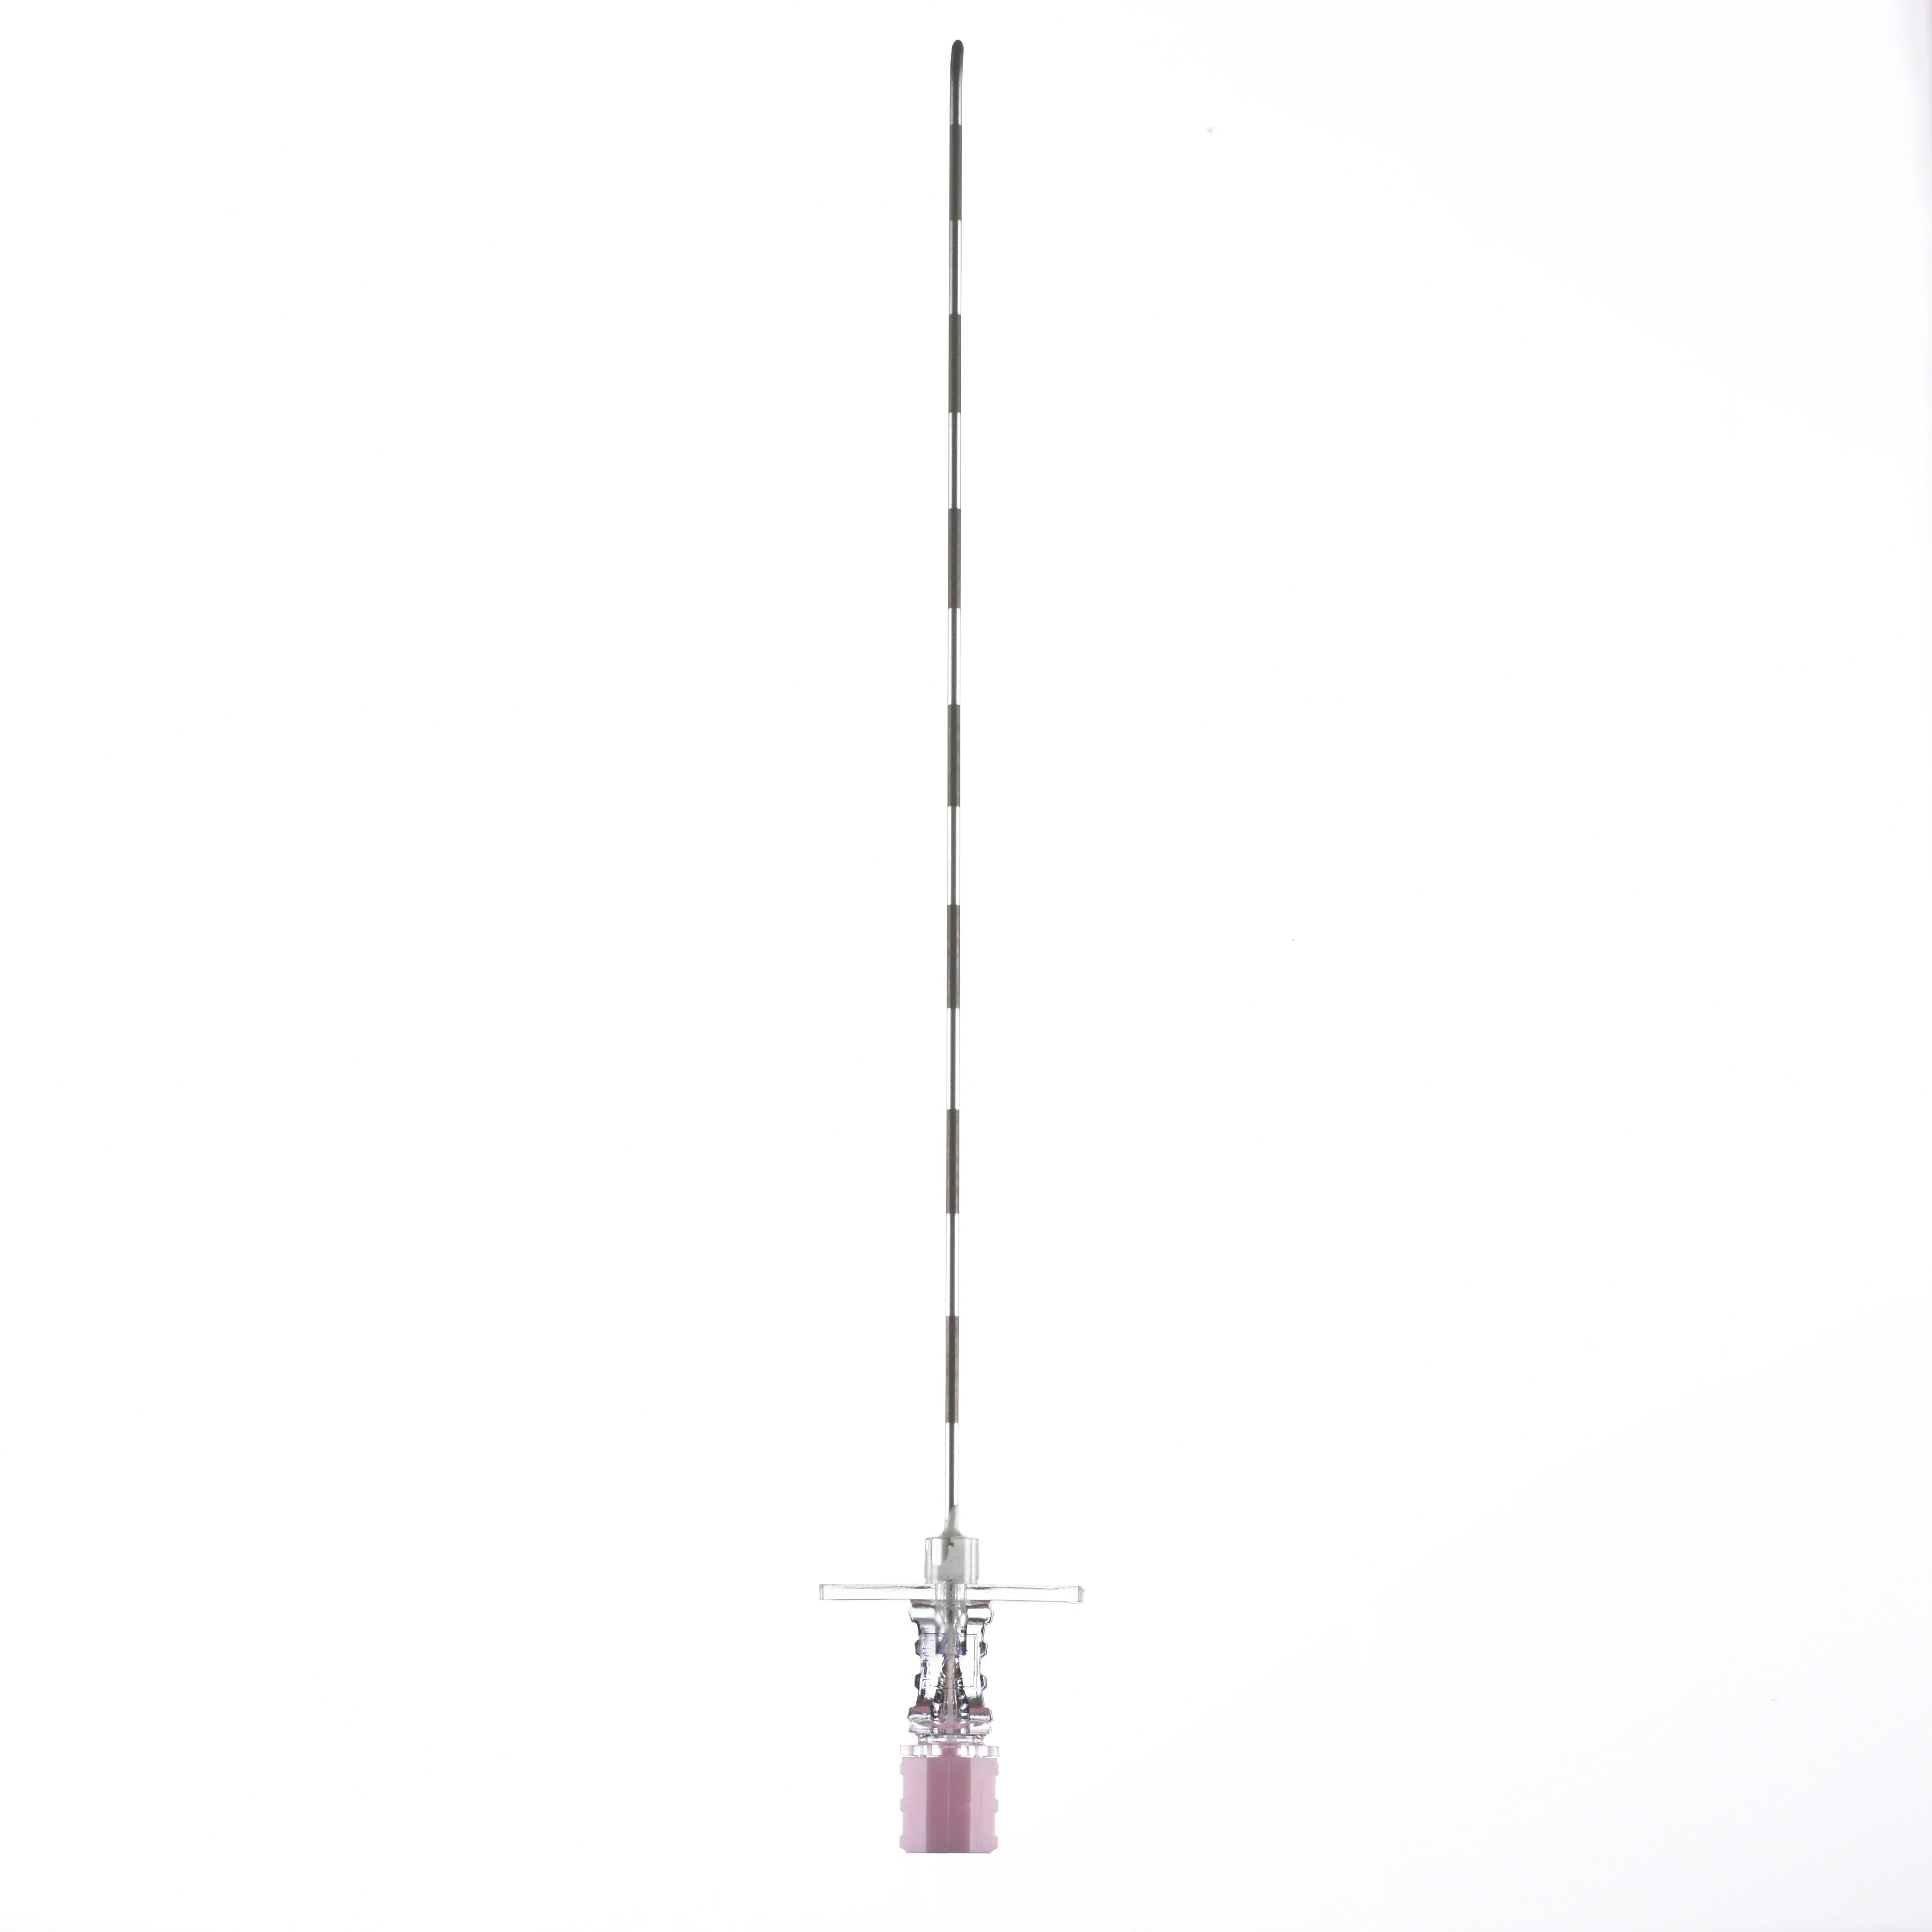 B. Braun Perifix 18 Ga x 6 in (150 mm) Tuohy Needle